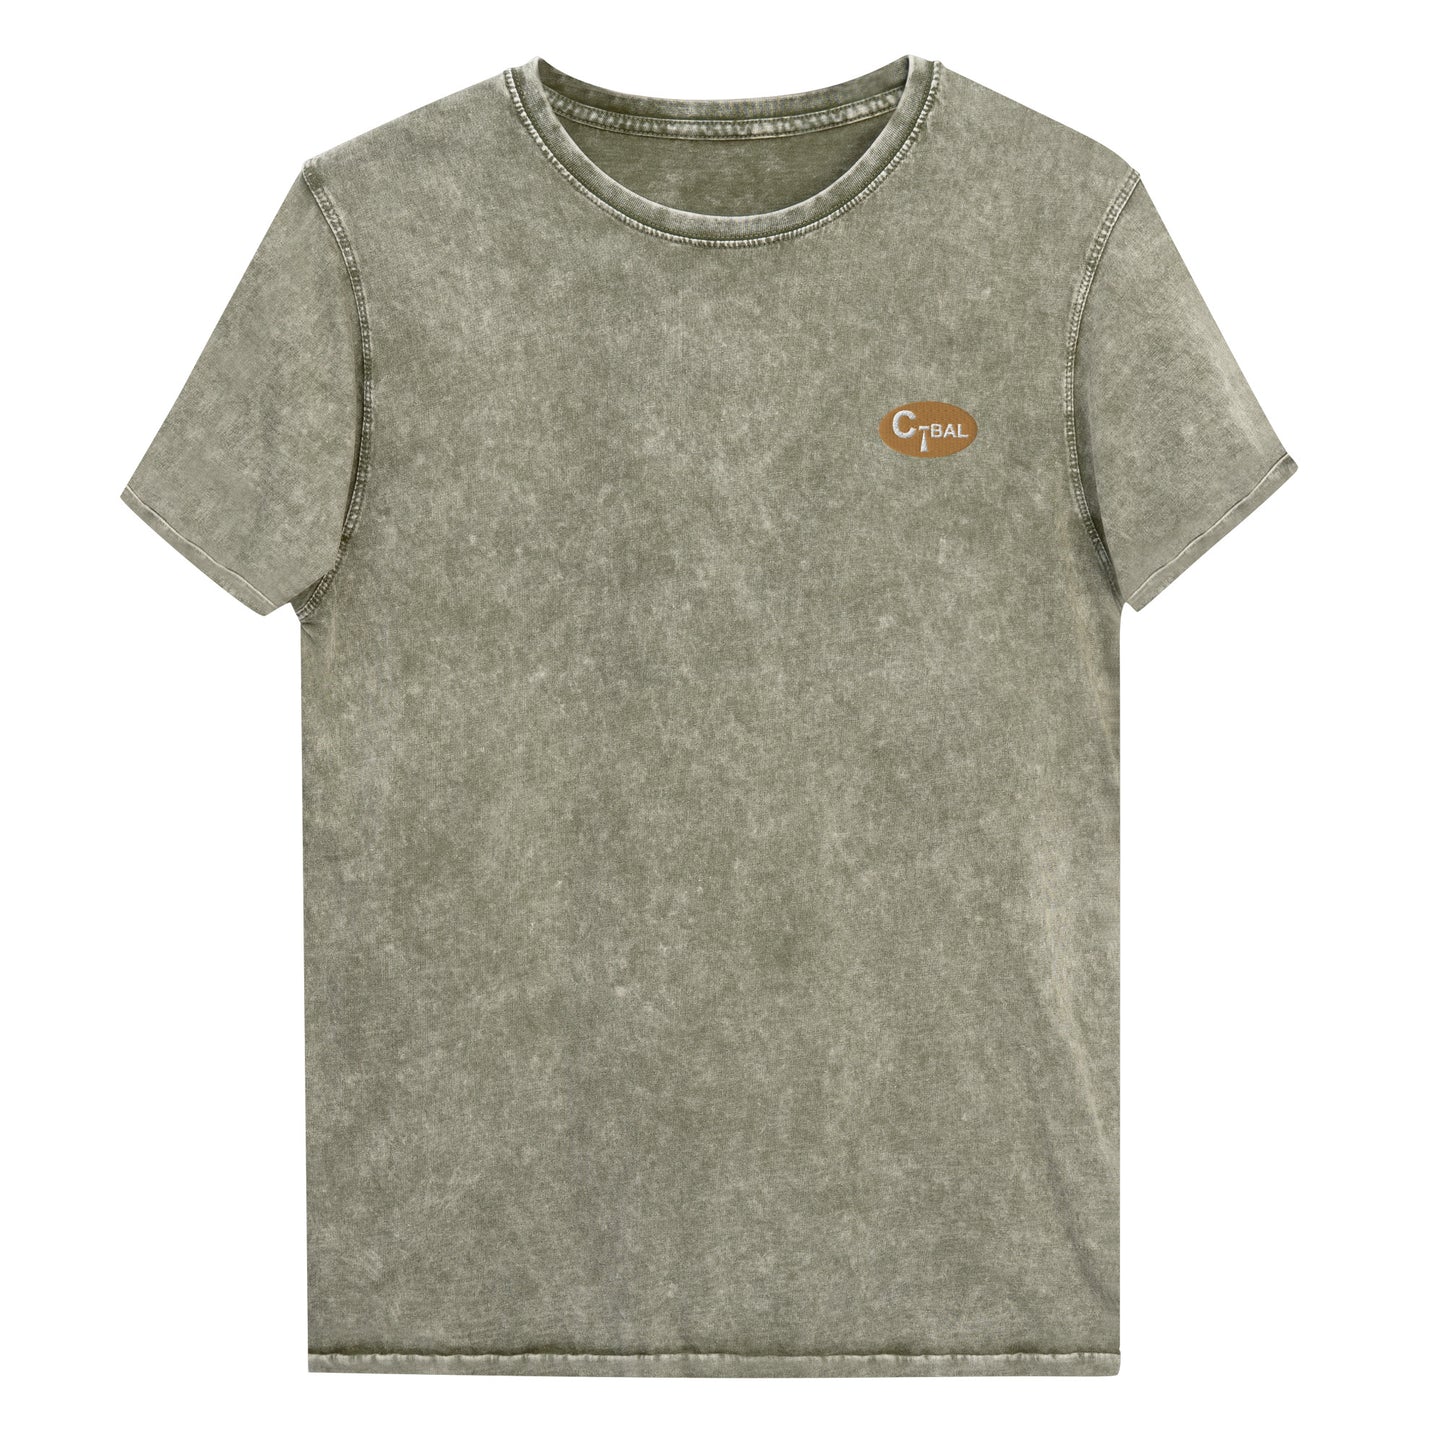 B003 - Denim T-shirt (C-BAL : Brown / Embroidery Logo)